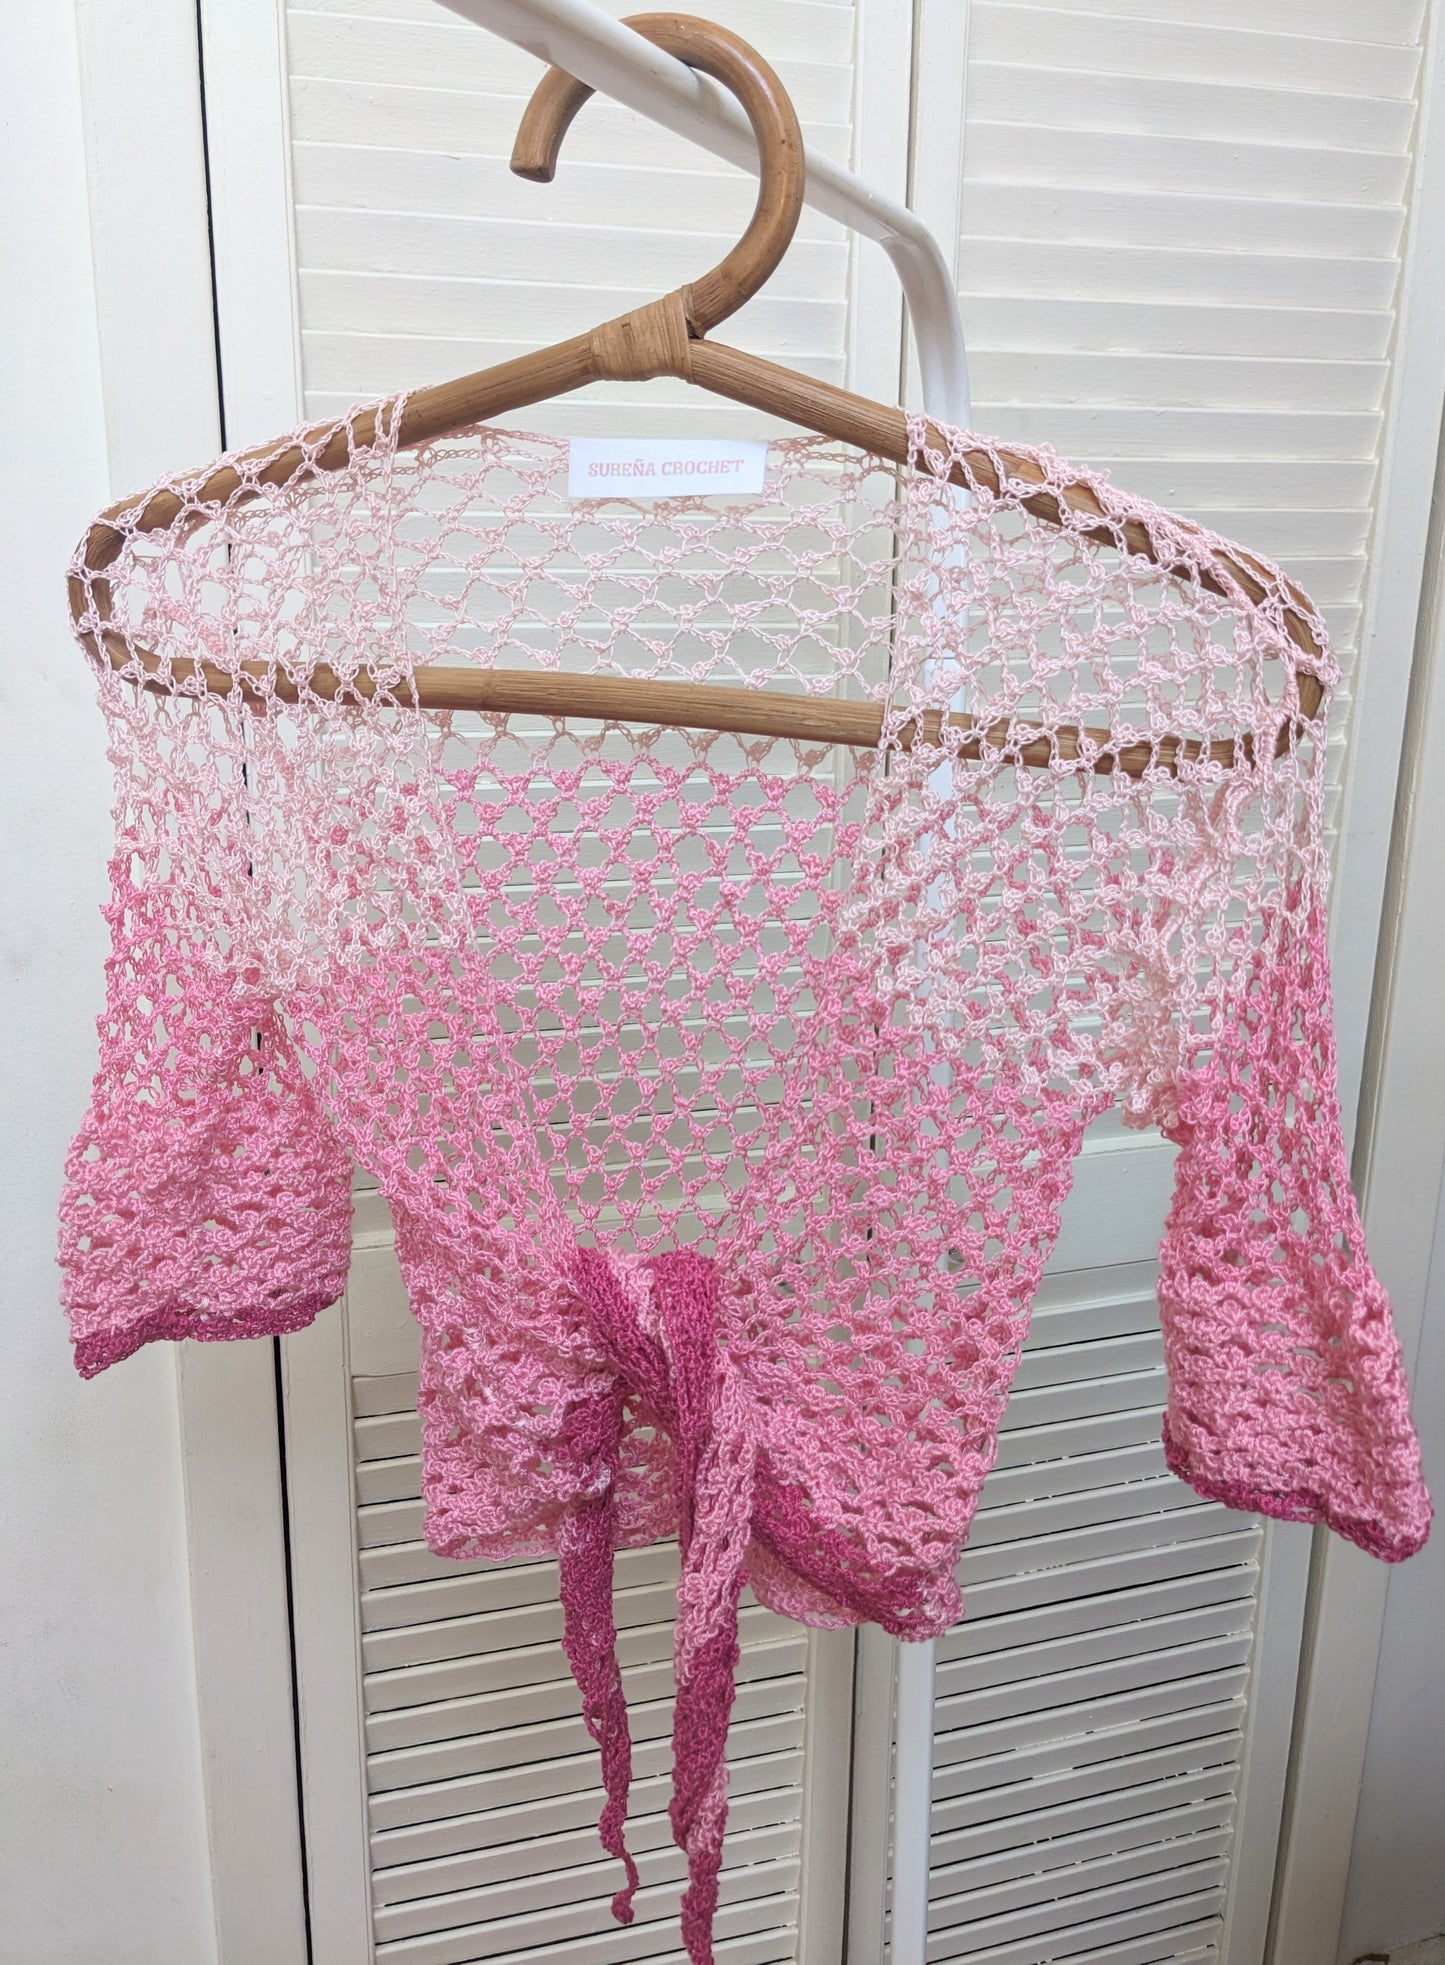 Sirena Crochet Top: Kiss